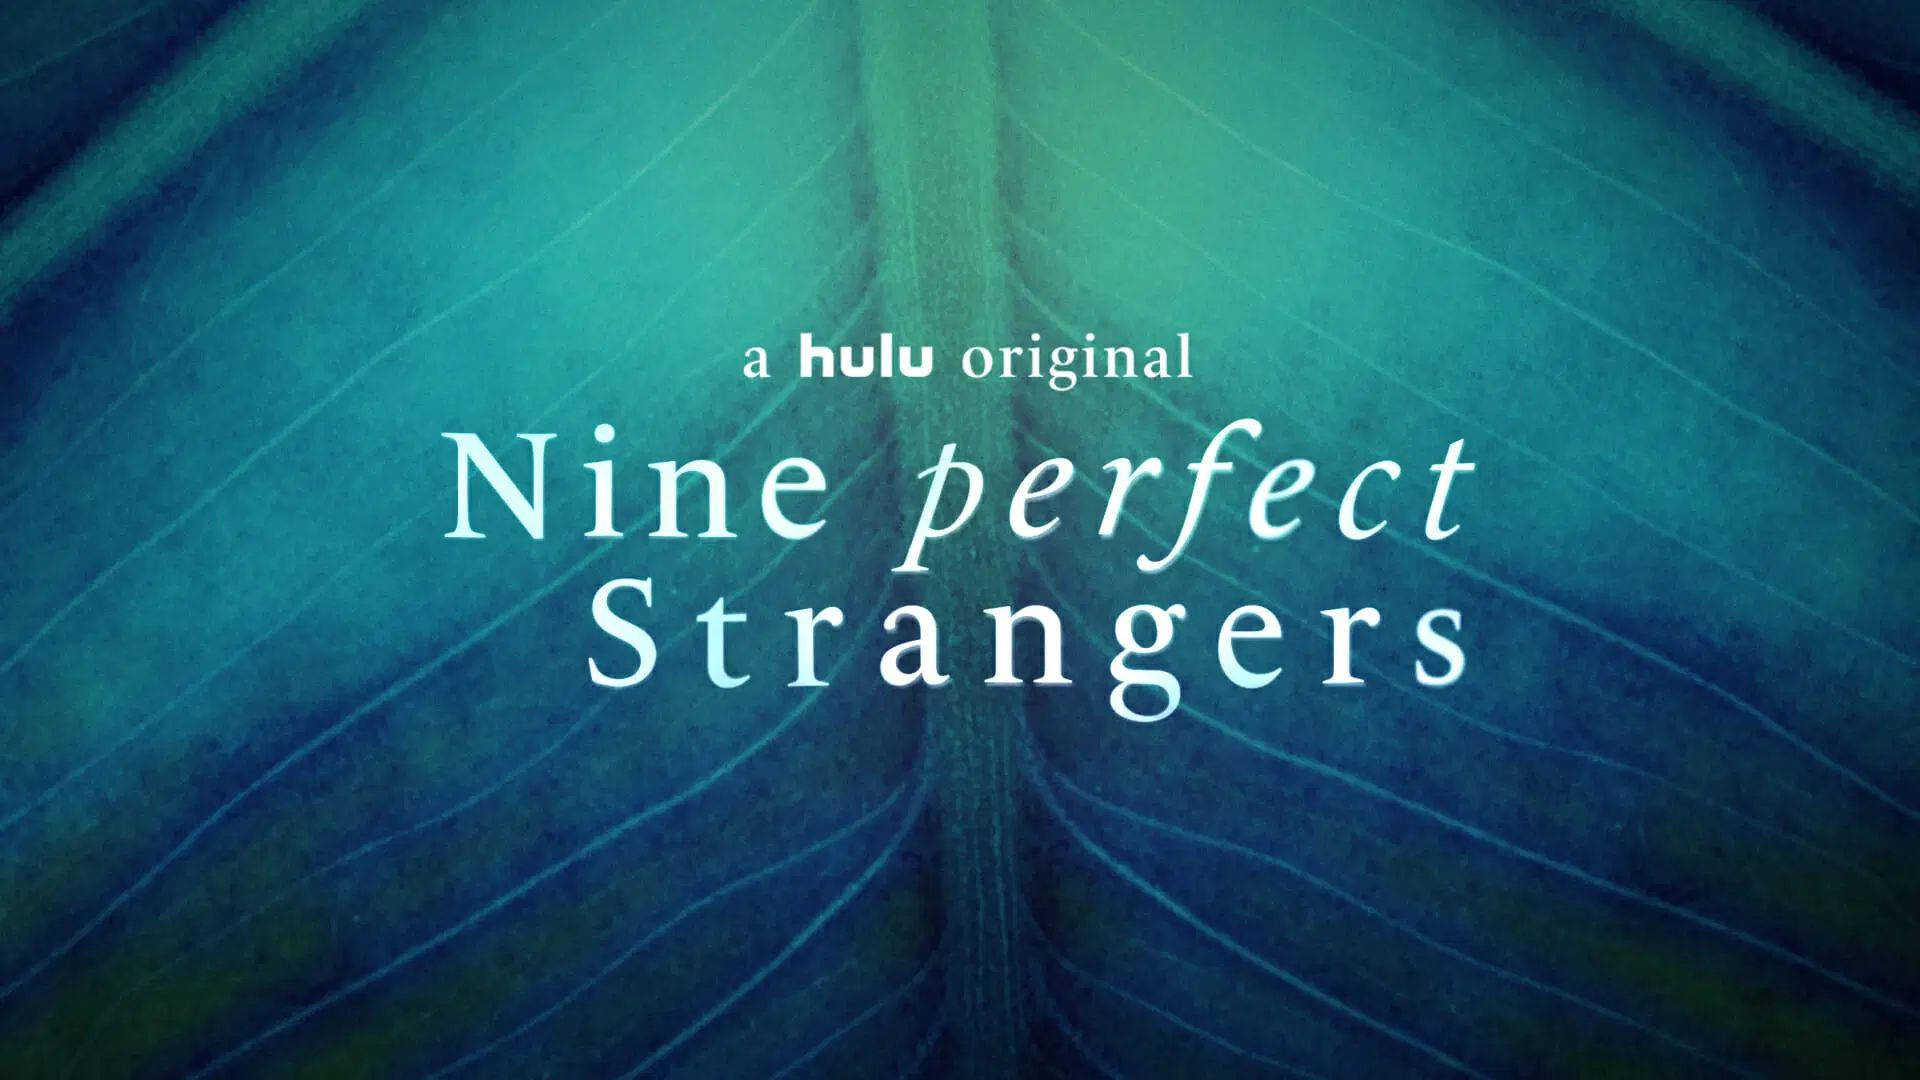 Nine Perfect Strangers On Leaf Background